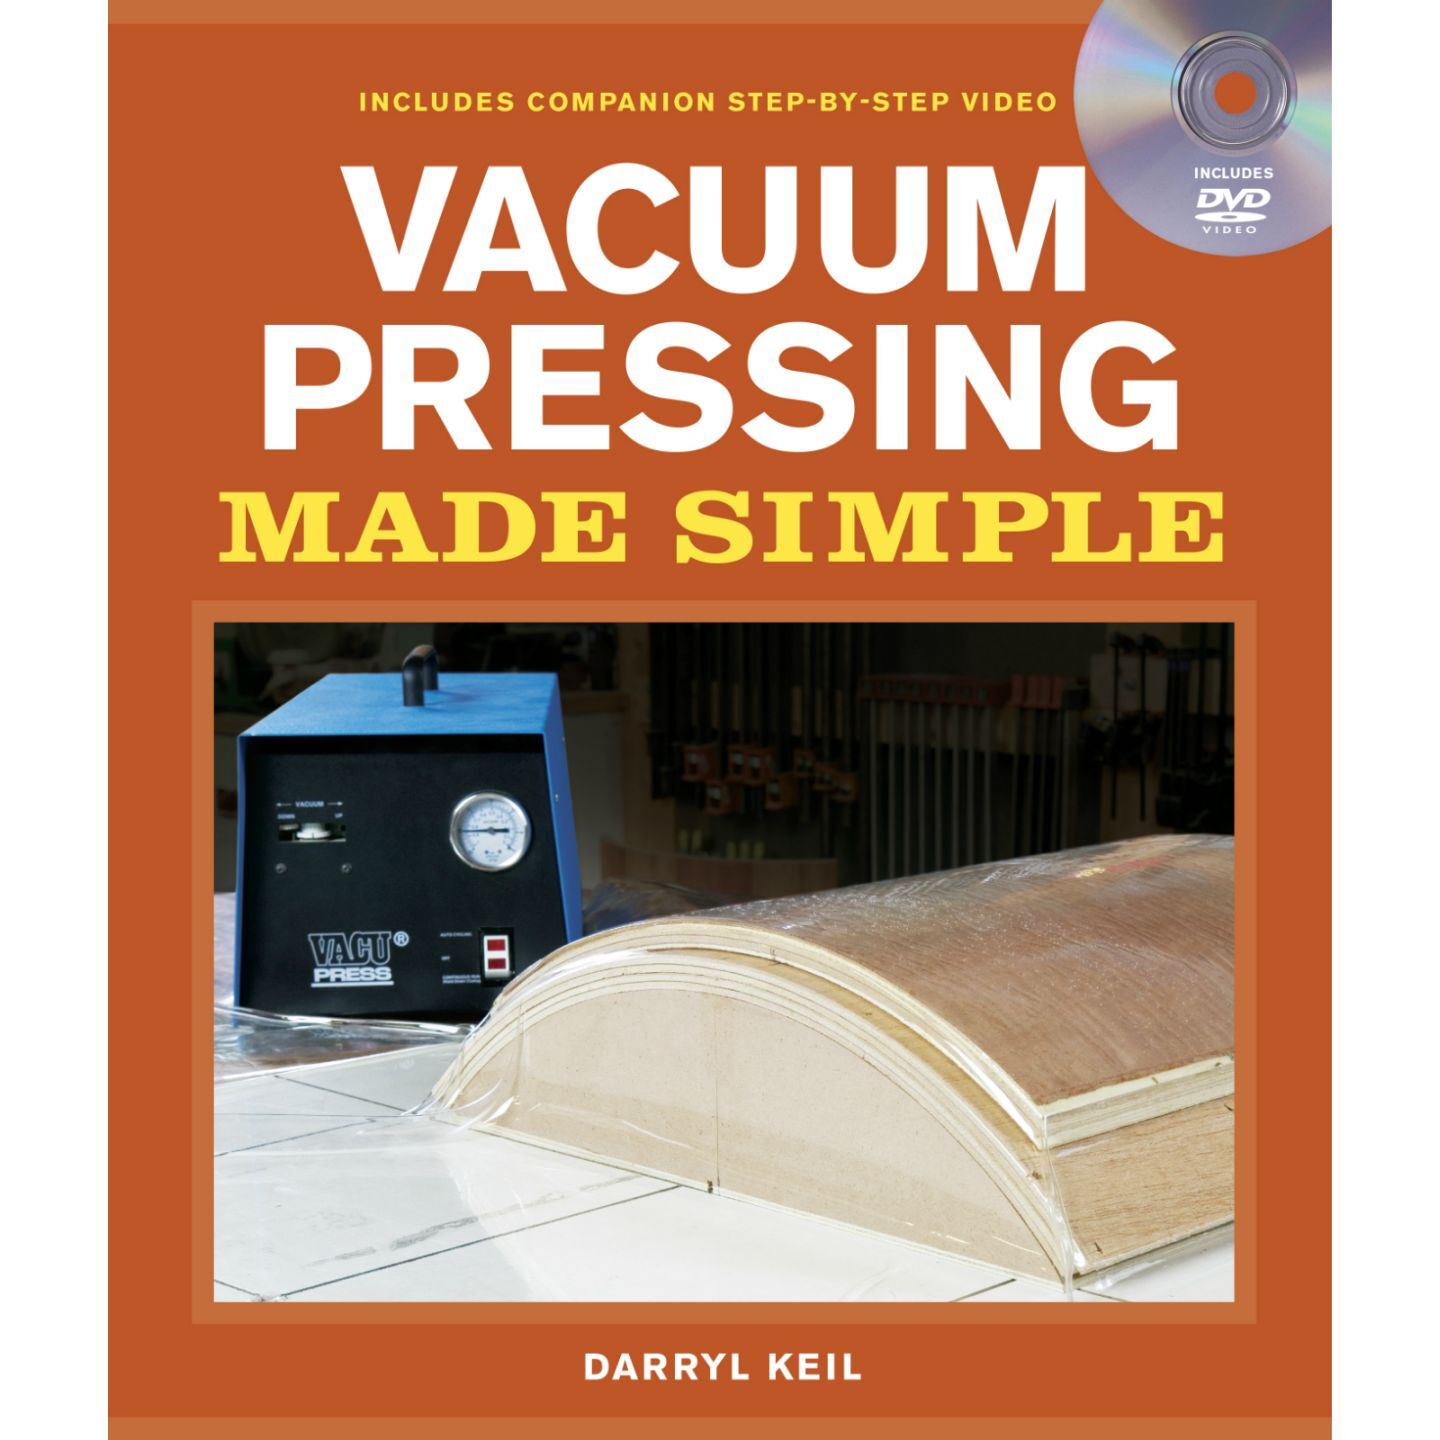 Vacuum Pressing Made Simple (Includes DVD)